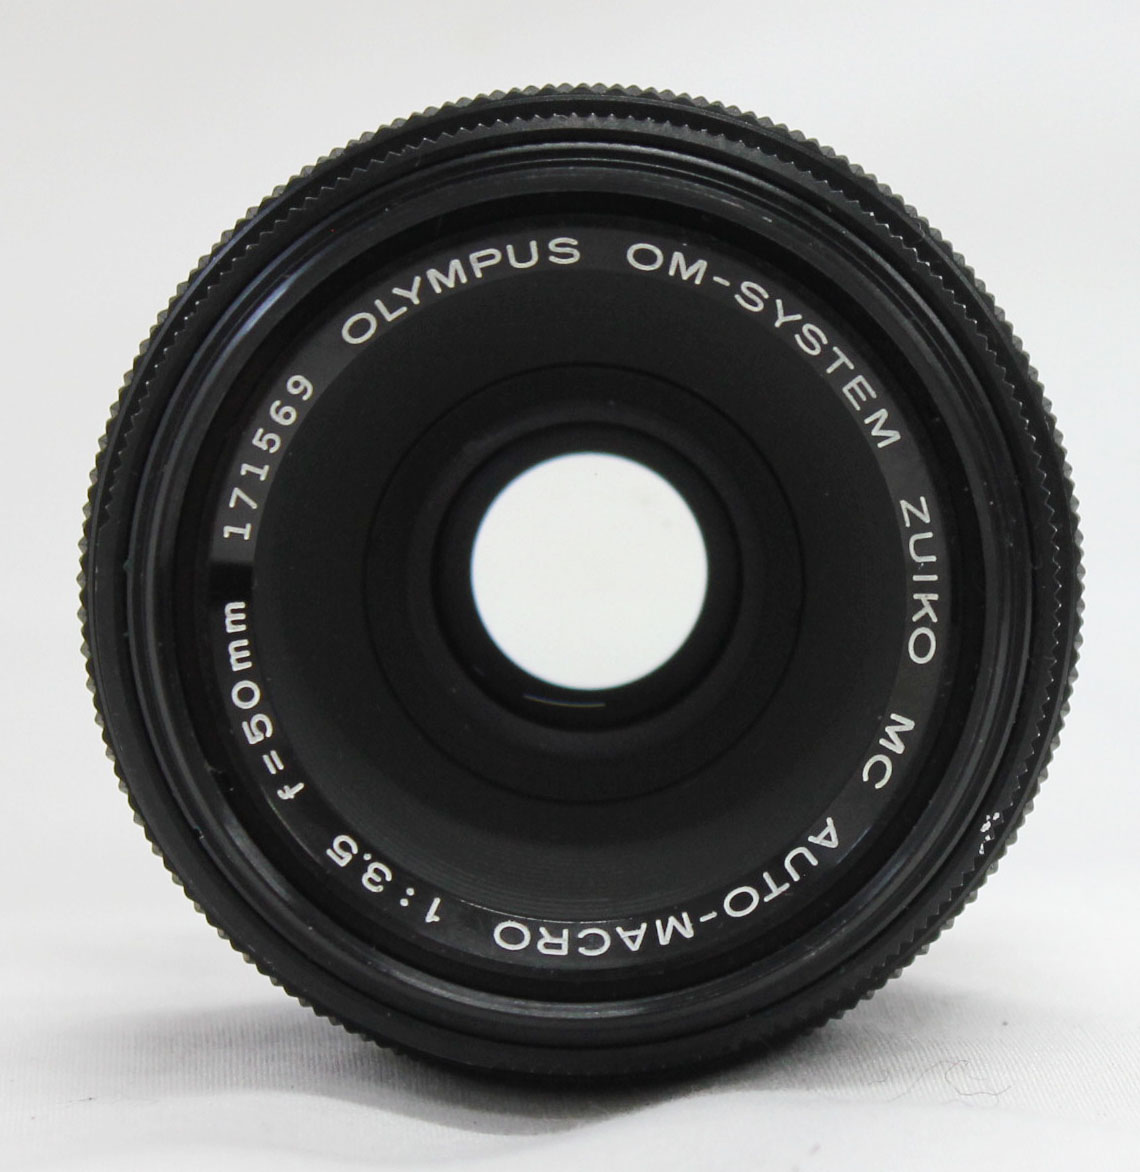 Olympus OM-2N 35mm SLR Film Camera with Macro 50mm F/3.5 Lens, Winder & Flash from Japan Photo 16